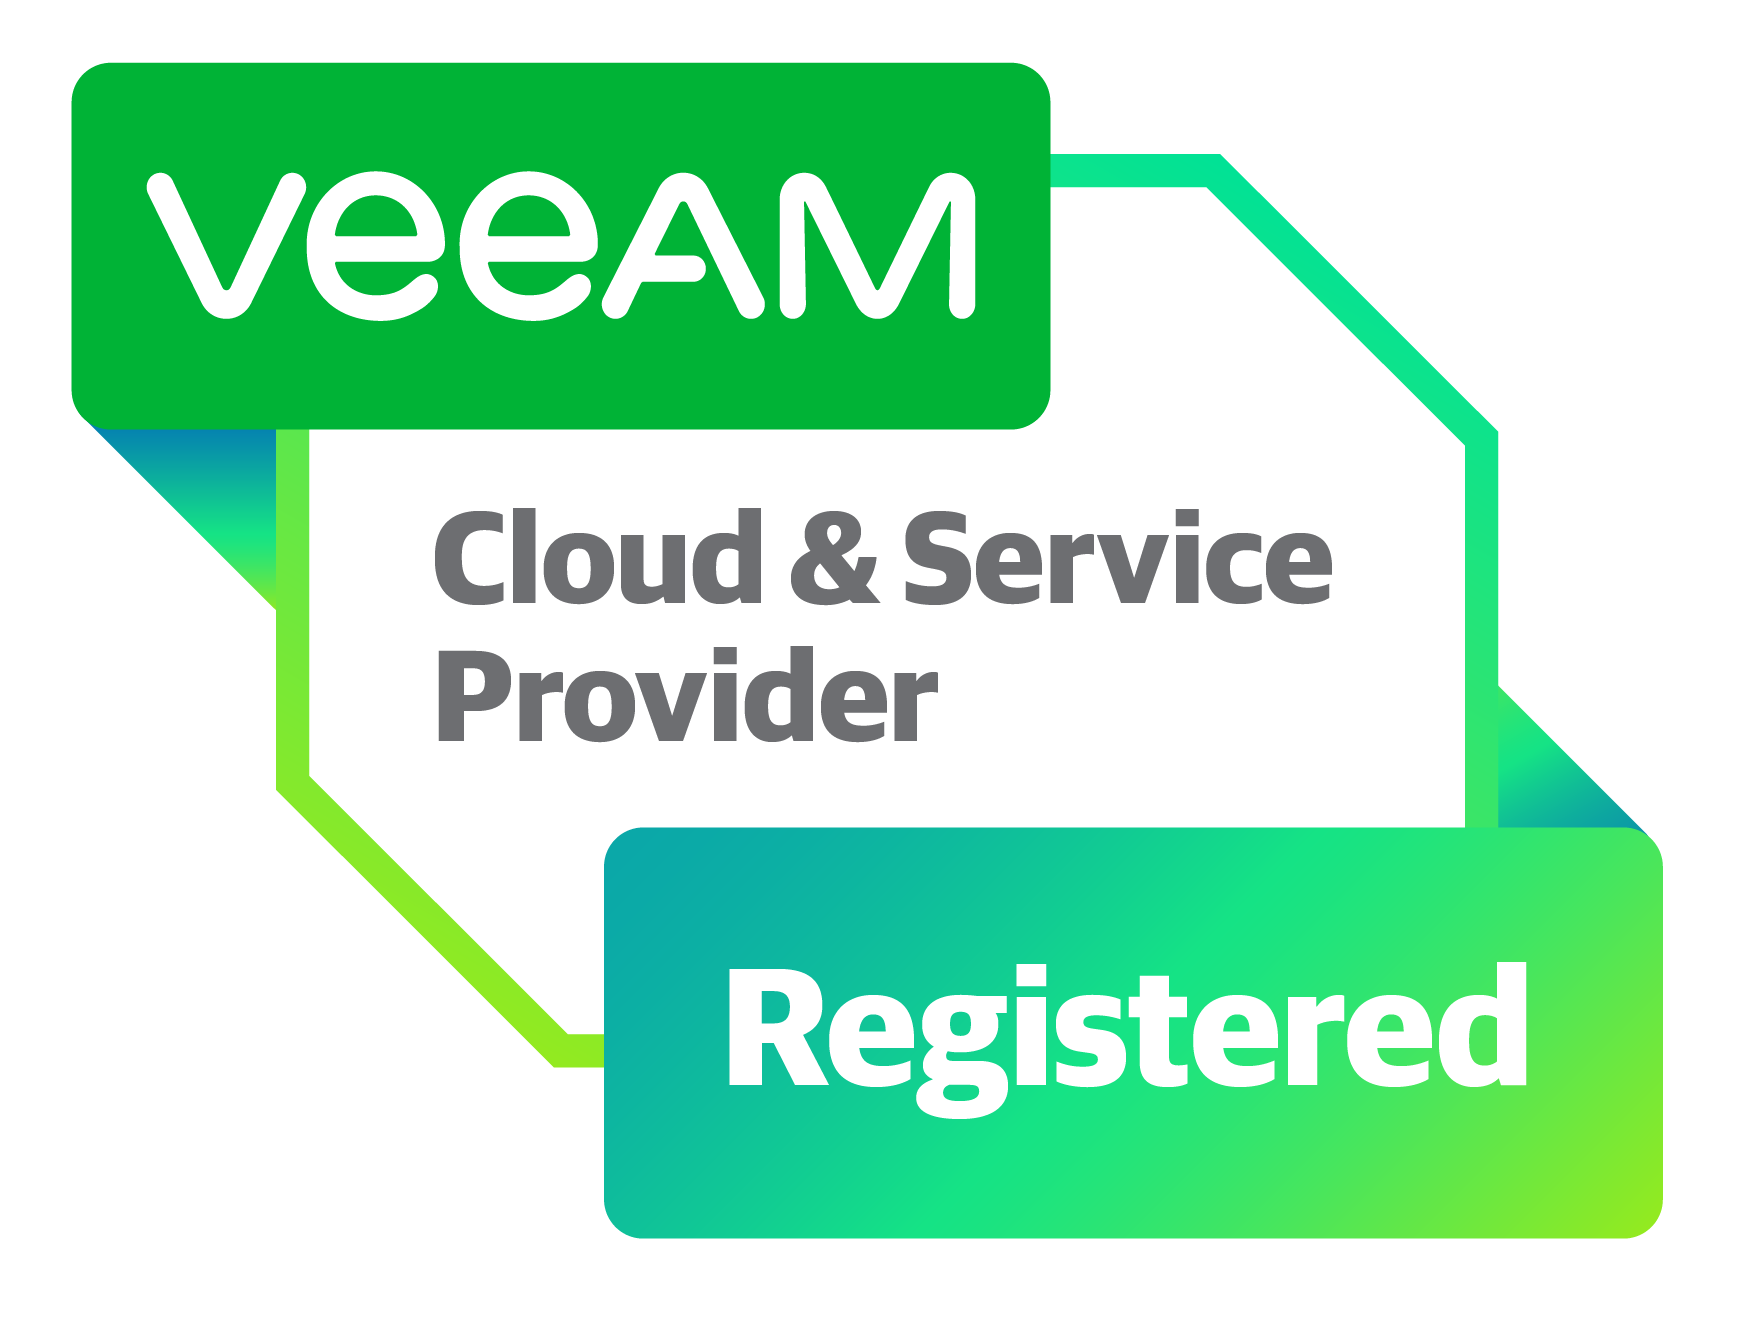 VEEAM Cloud & Service Provider